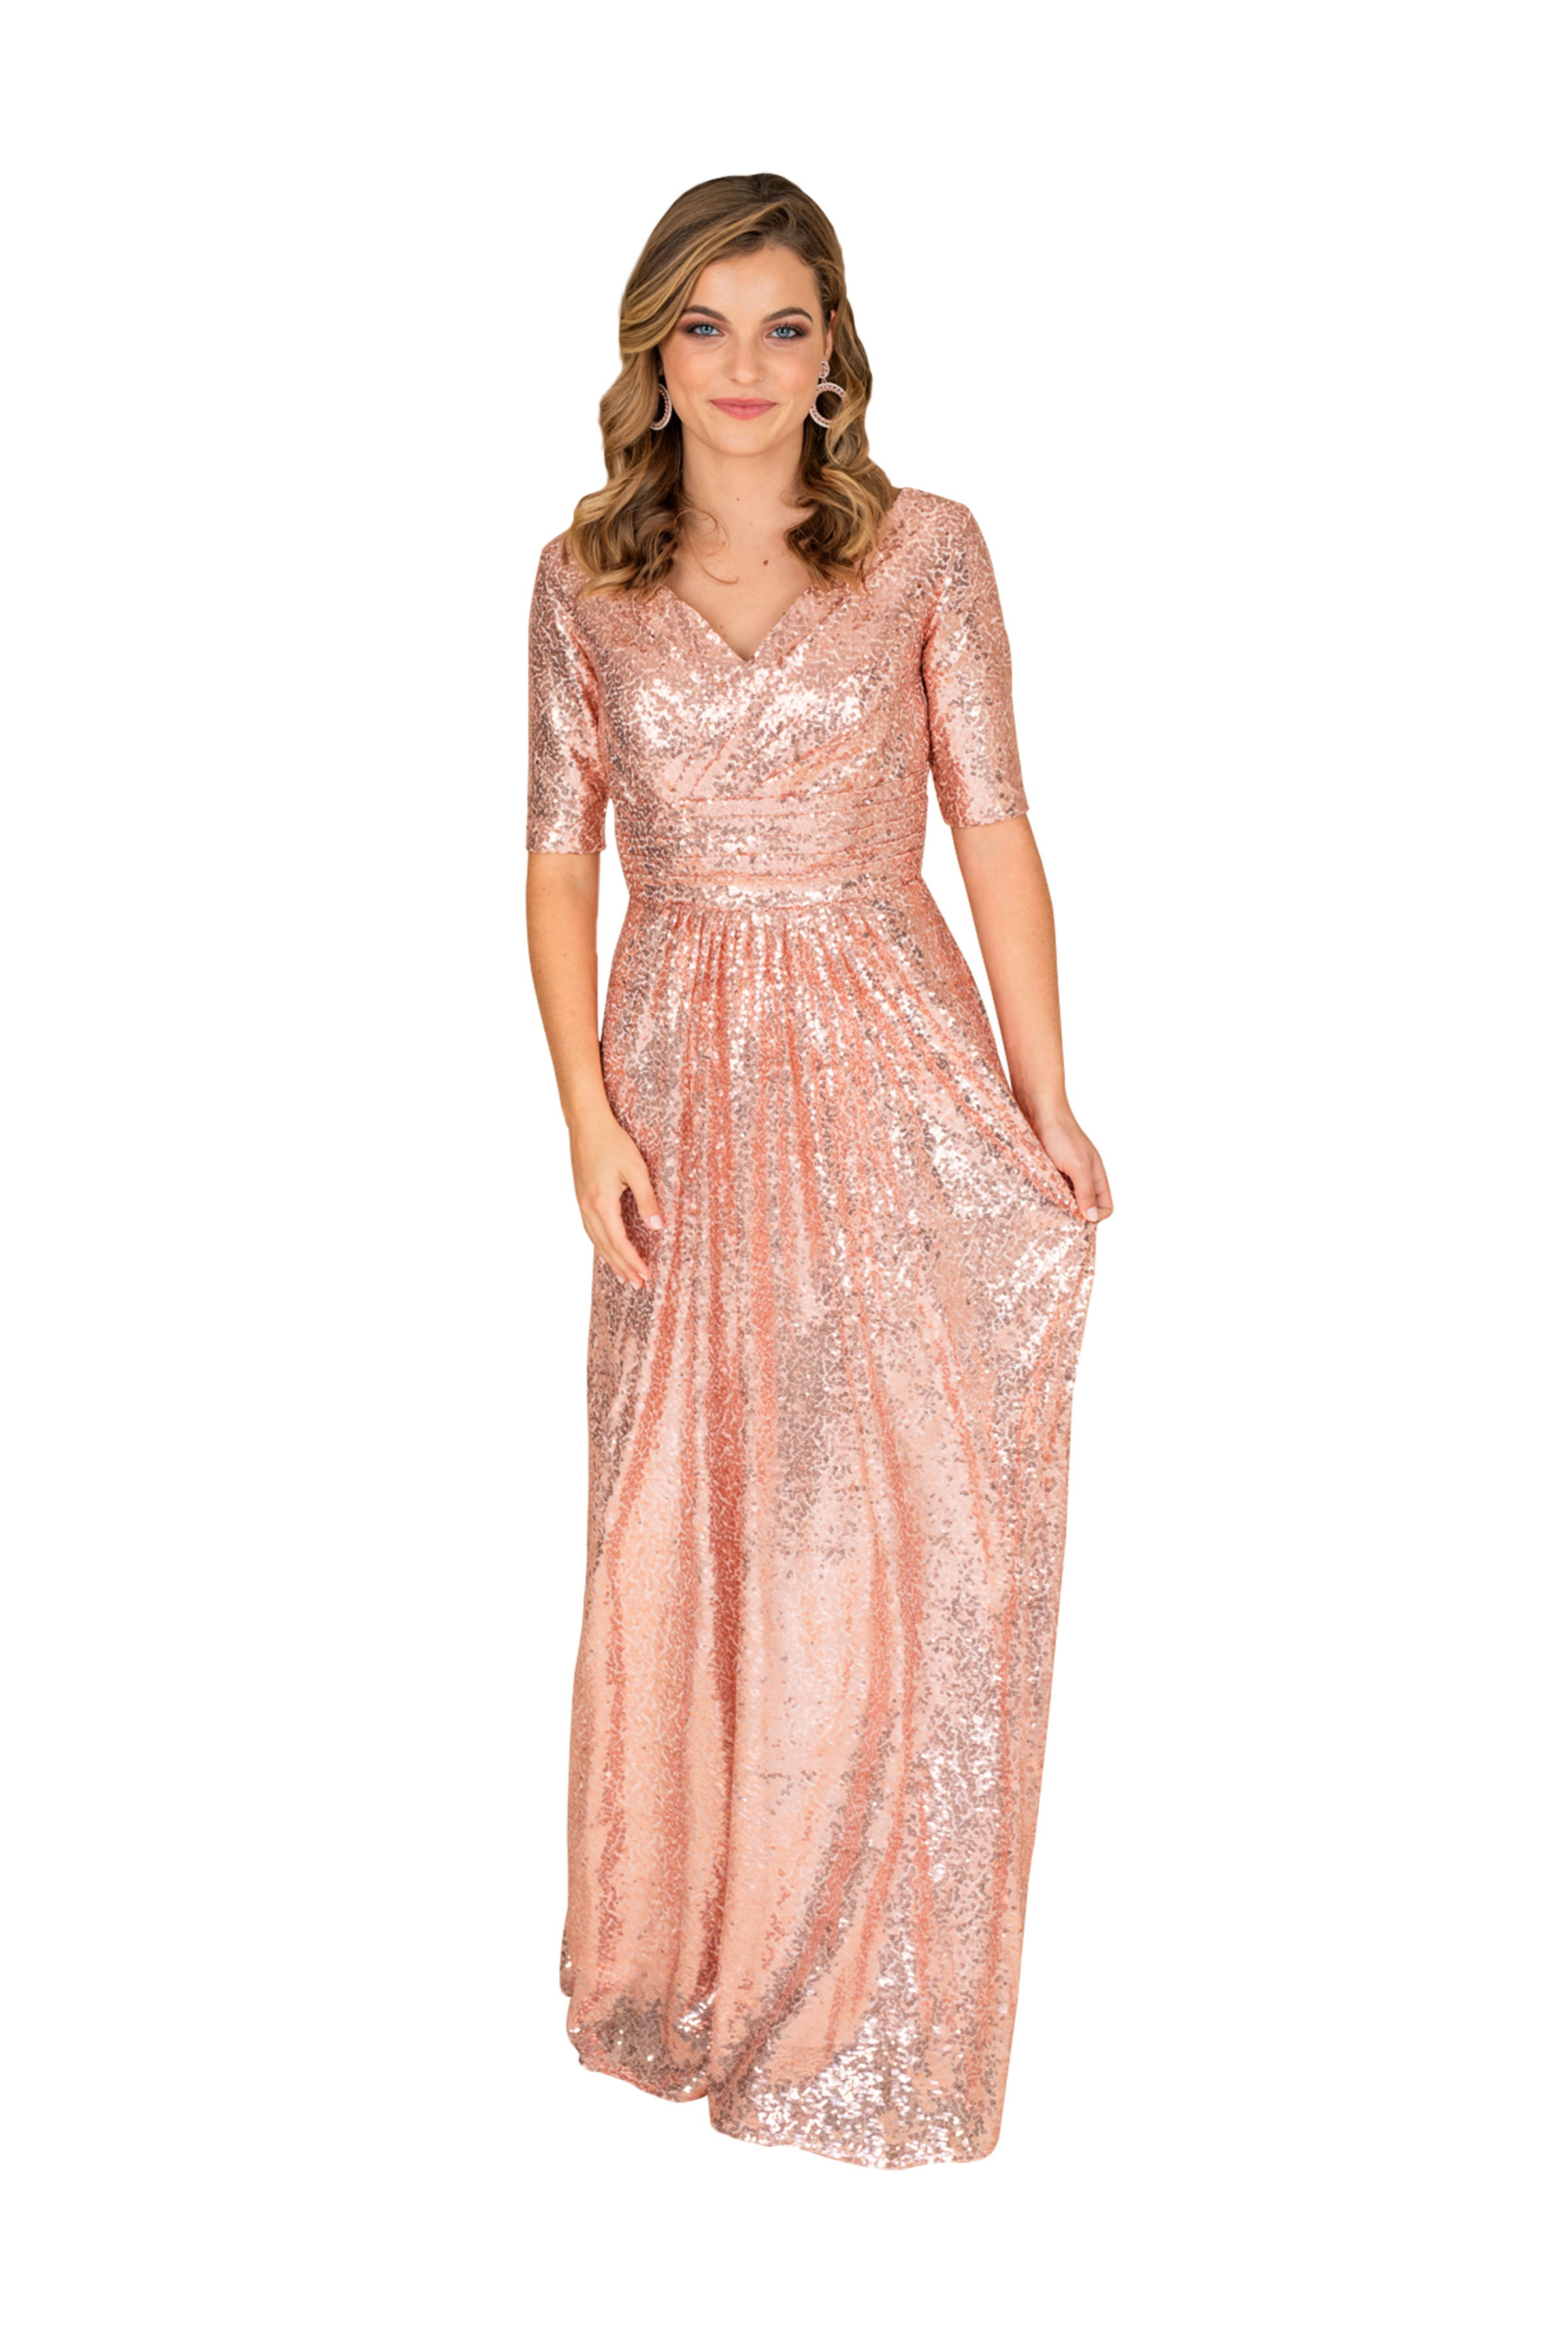 Buy Pink Long Flare Dress Set by KIKU at Ogaan Market Online Shopping Site